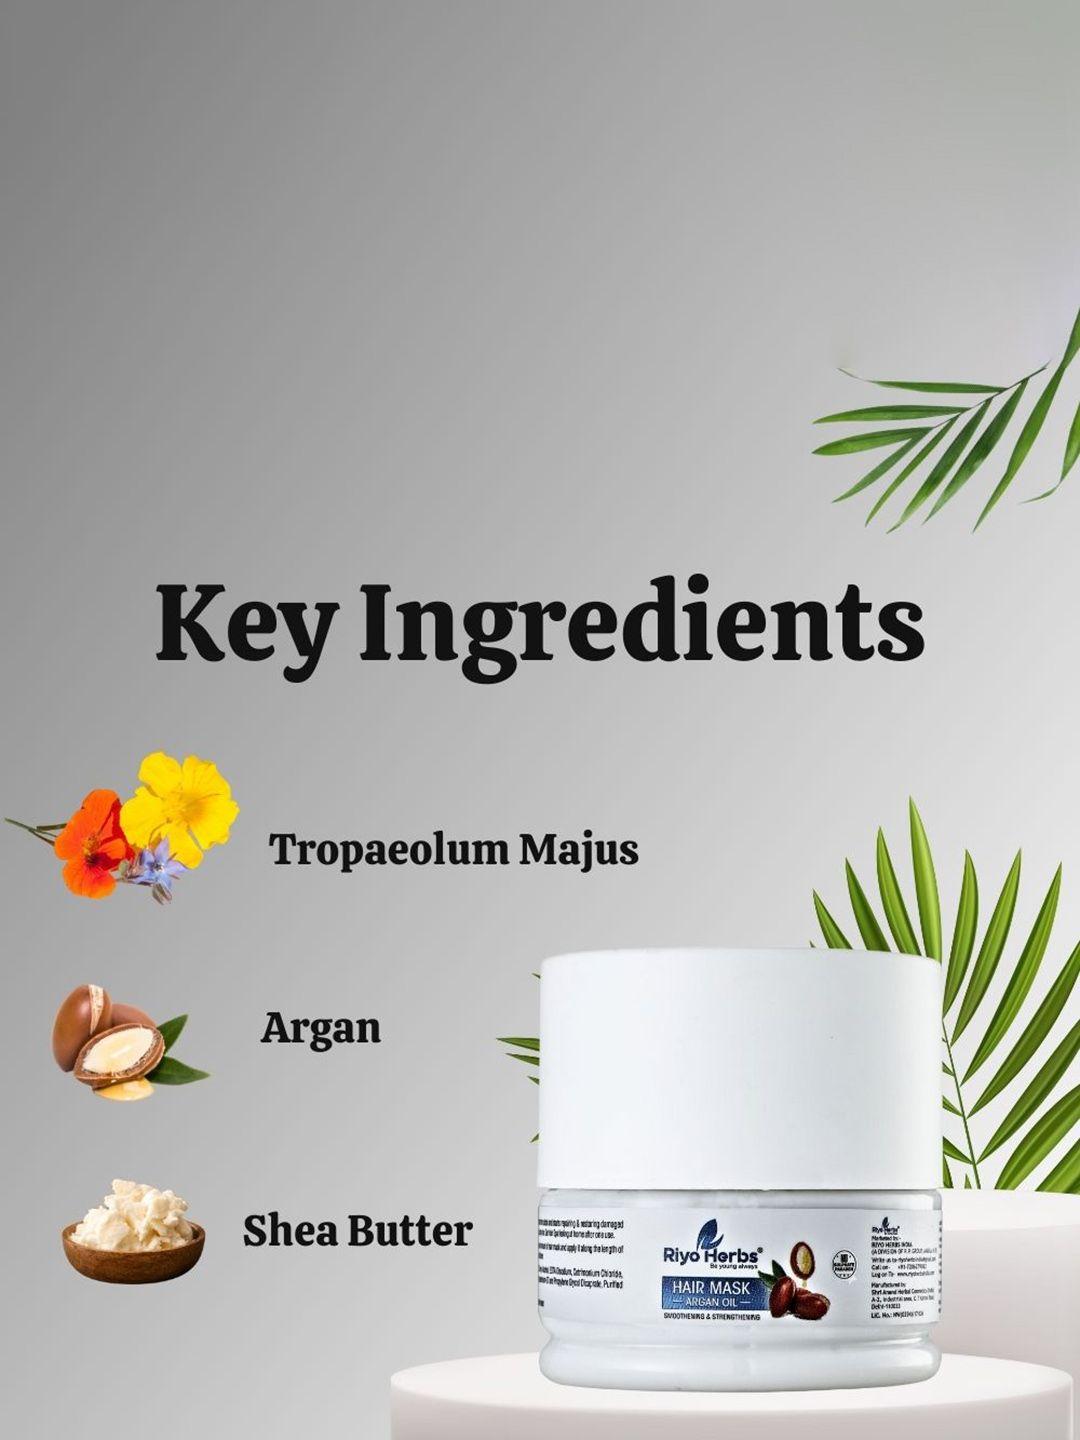 riyo herbs argan oil hair mask for smoothening & straightening - 200g